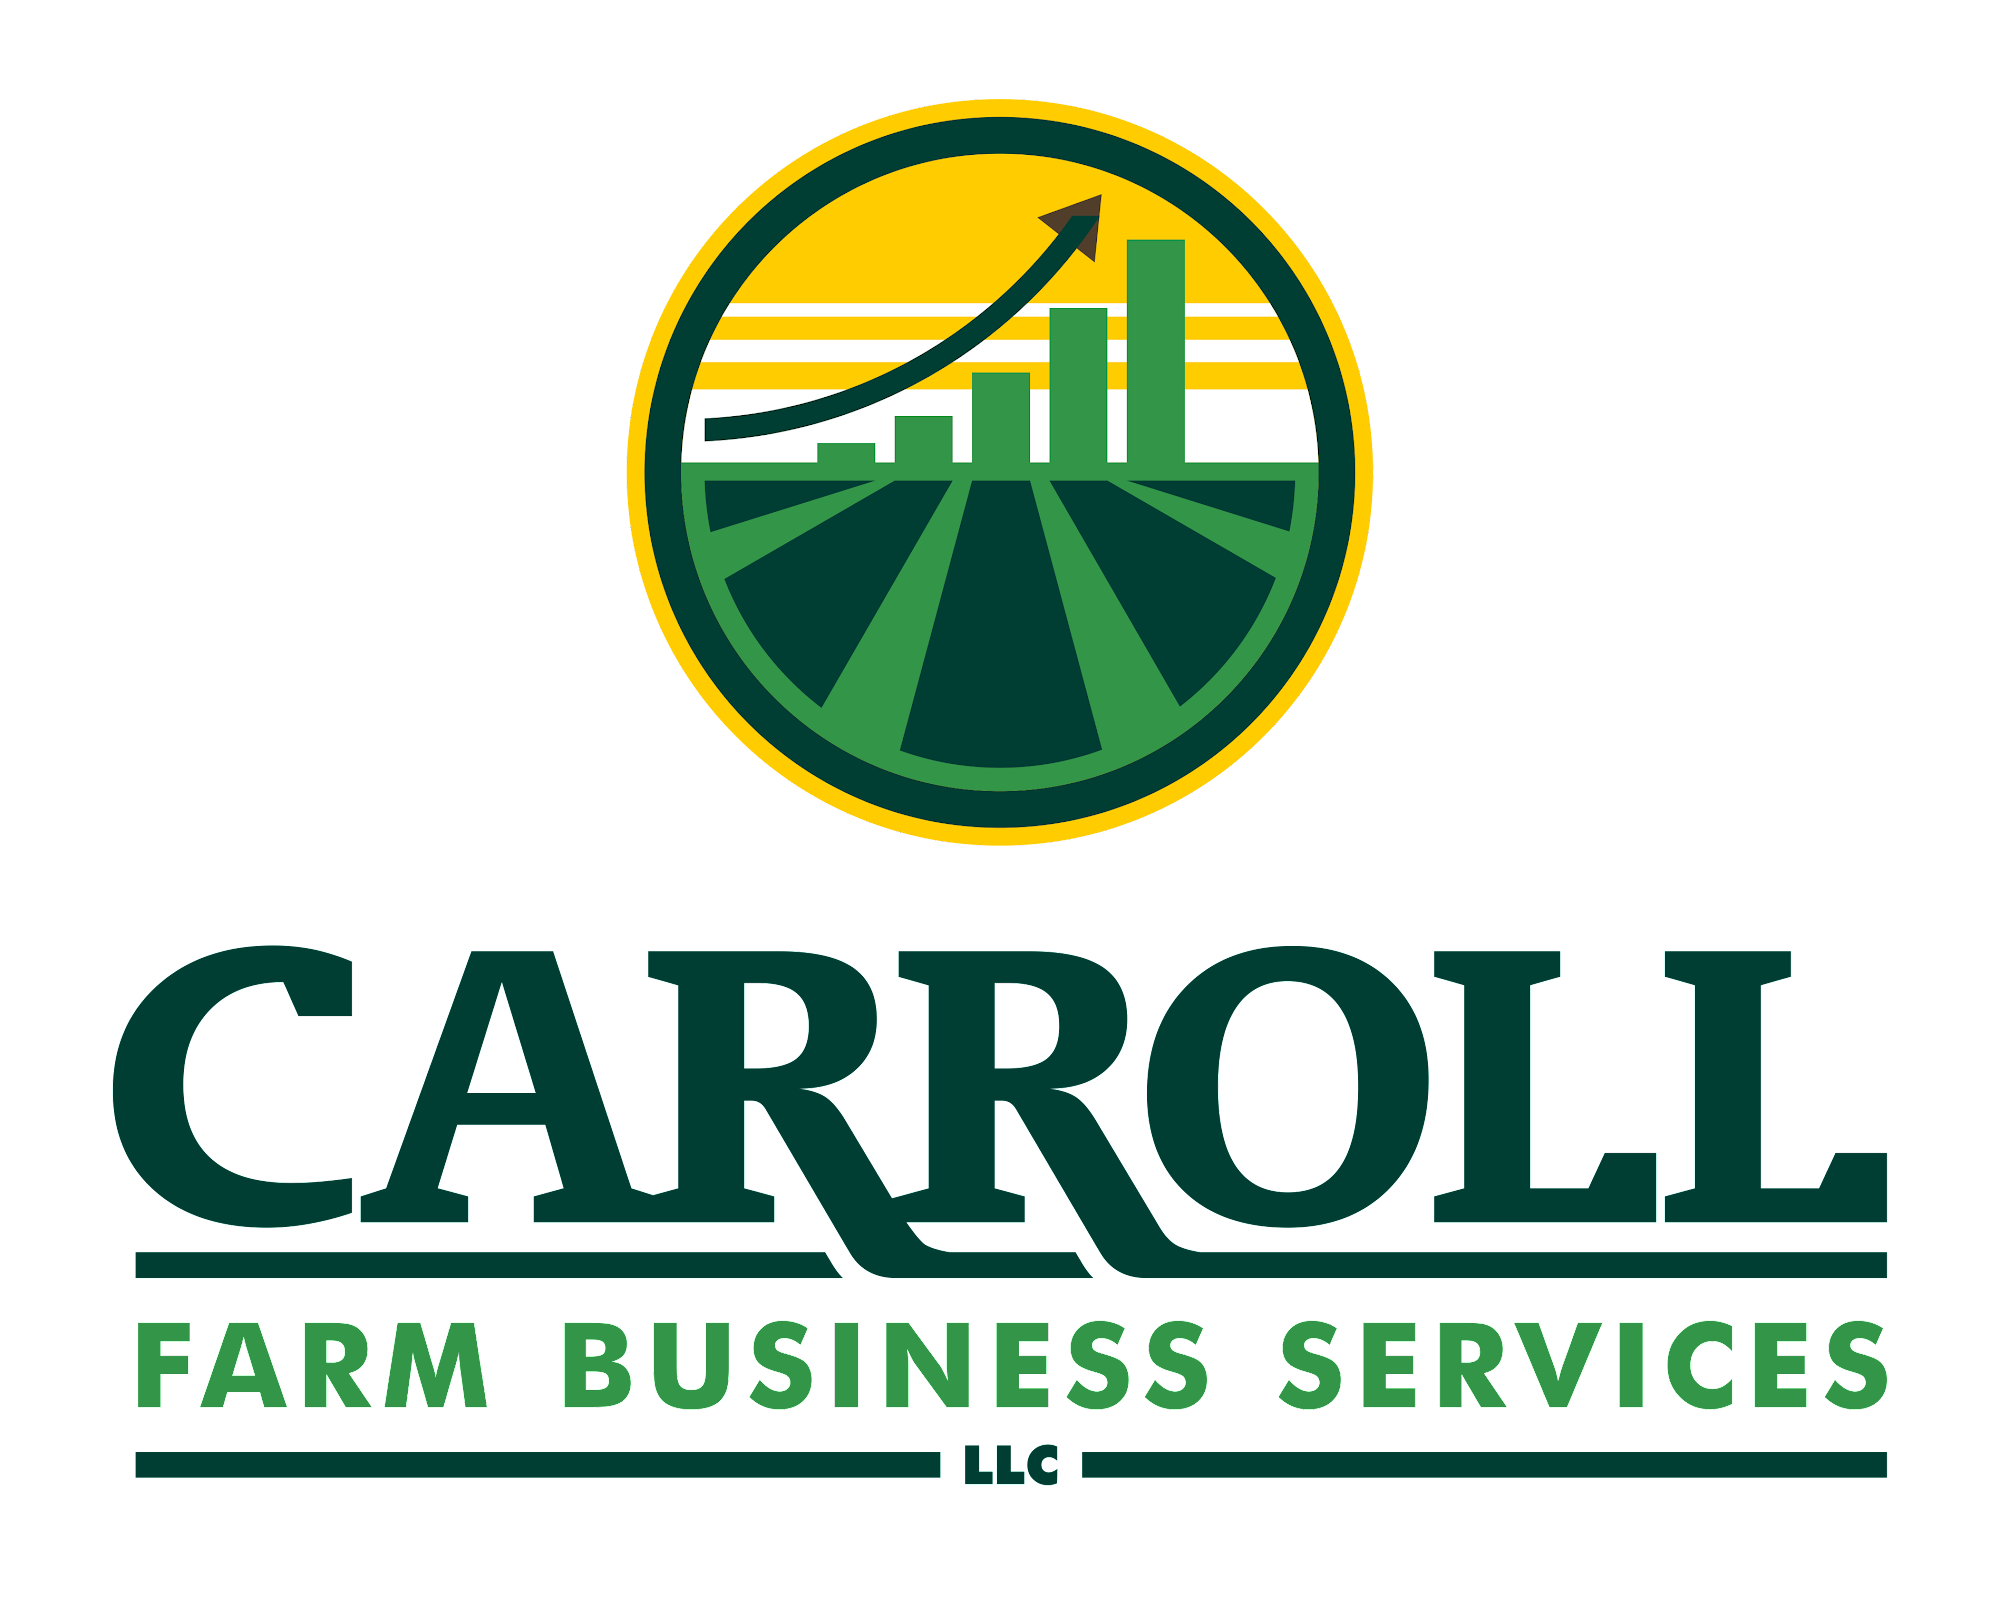 Carroll Farm Business Services LLC 214 W Washington St Ste C, Pontiac Illinois 61764